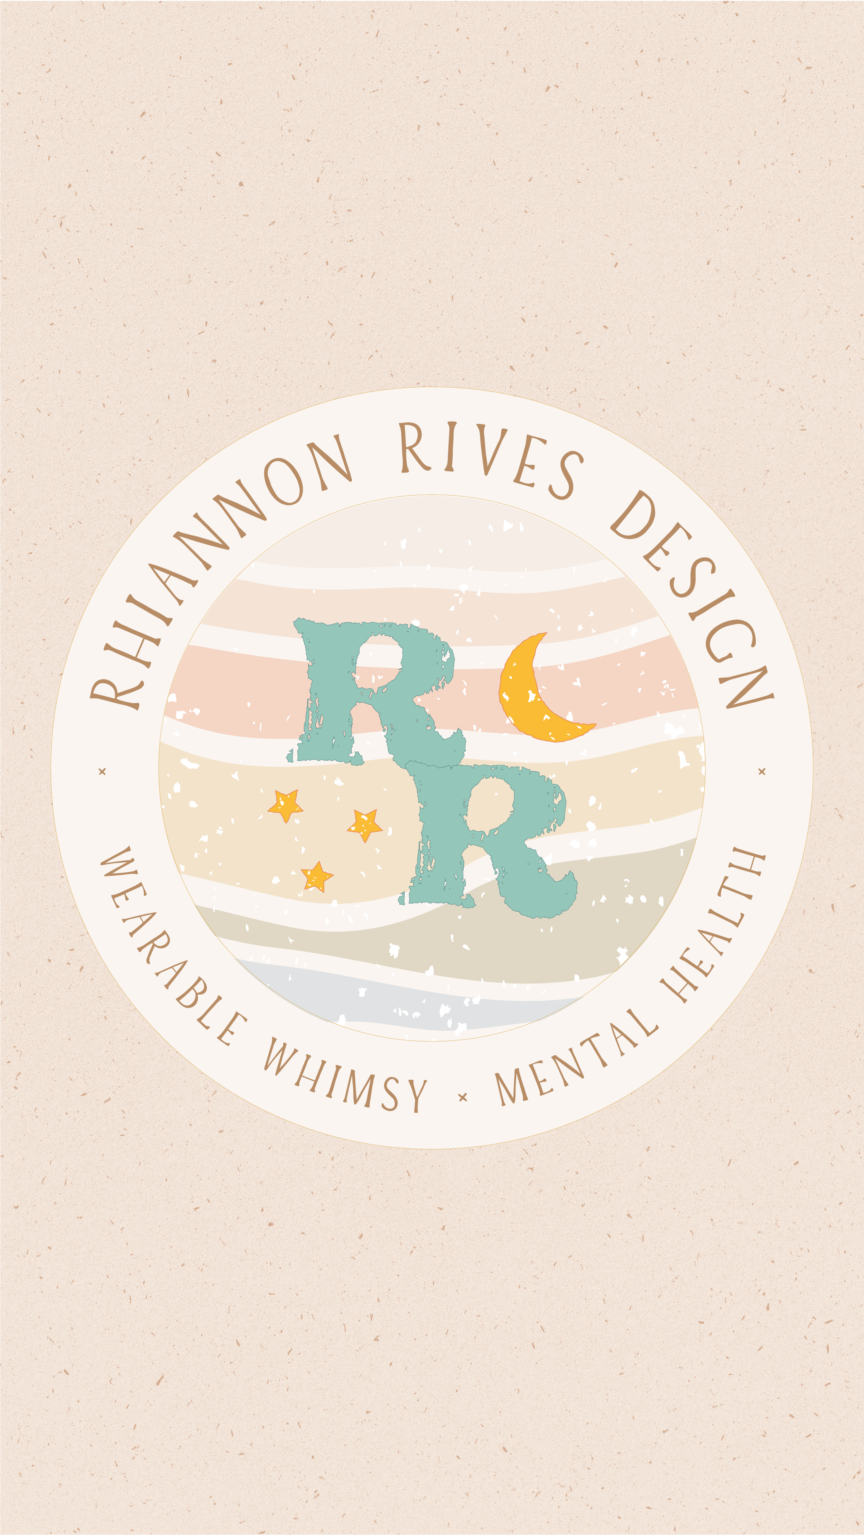 Rhiannon Rives Design Brand Submark by Absolute JEM